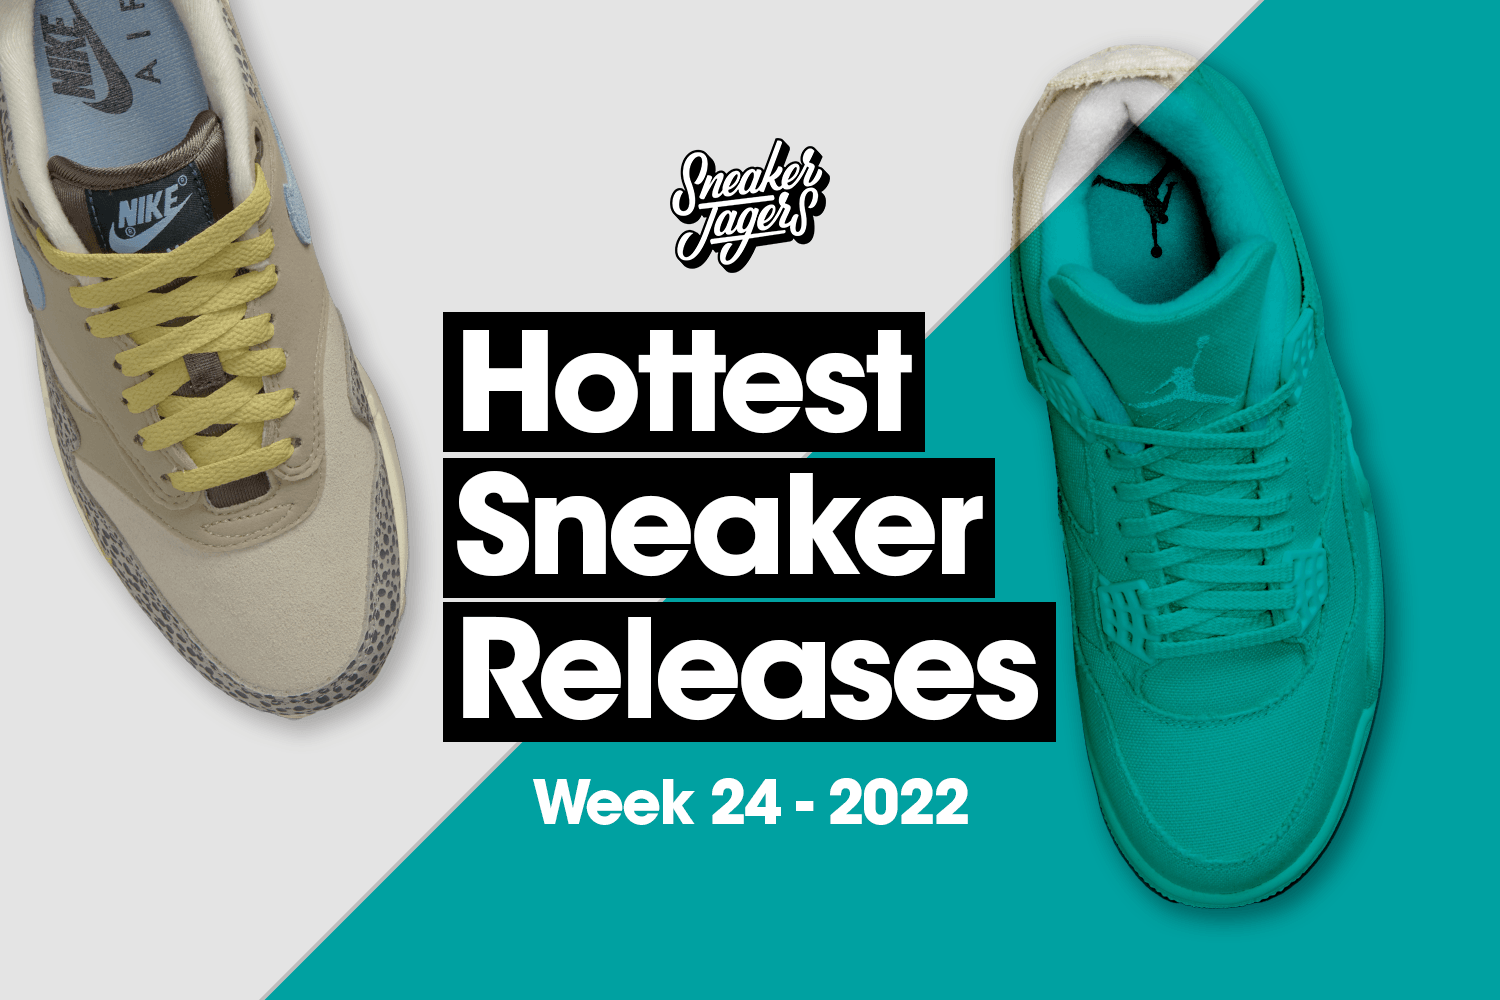 Hottest Sneaker Releases - Week 24